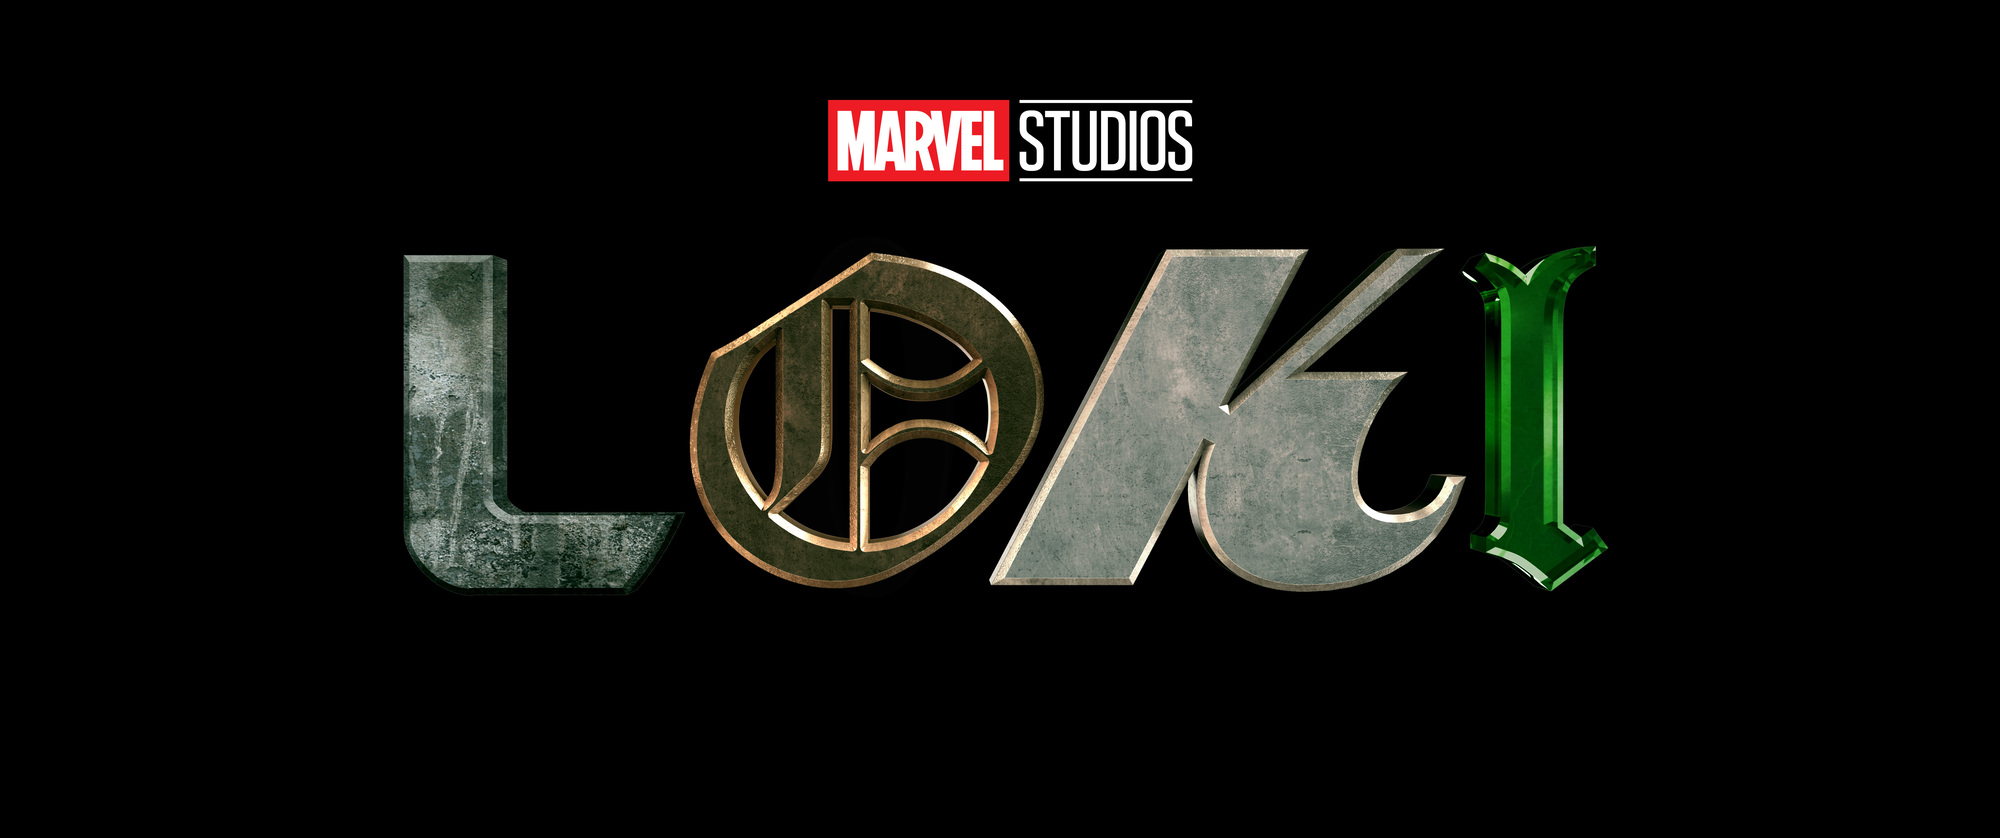 Disney+ releases 'Loki' art ahead of its June 11 release